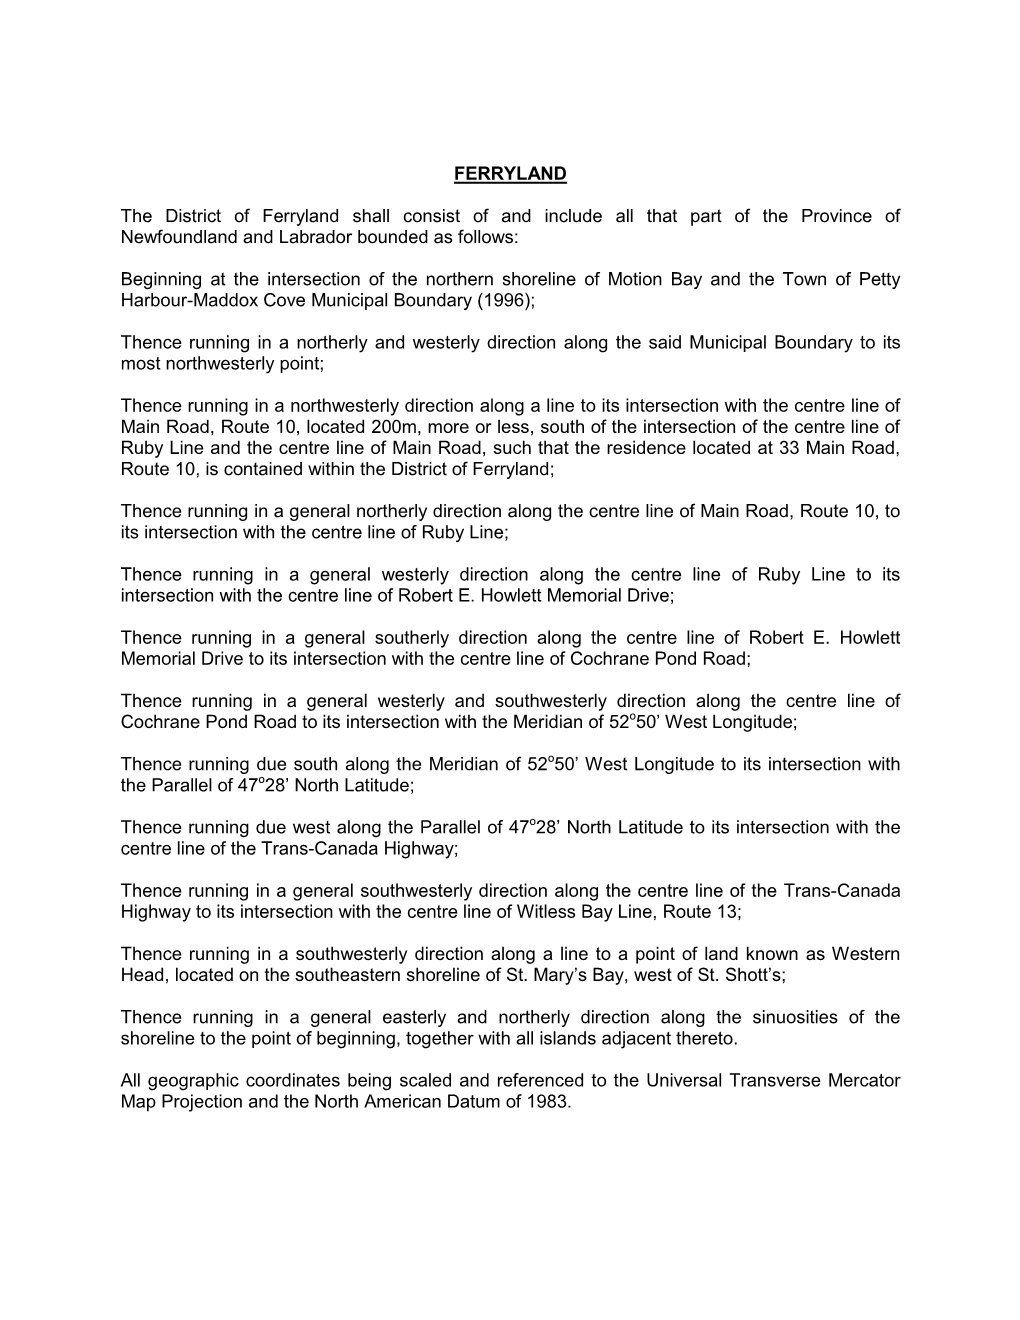 Legal Description for Ferryland PDF Document Opens in New Window